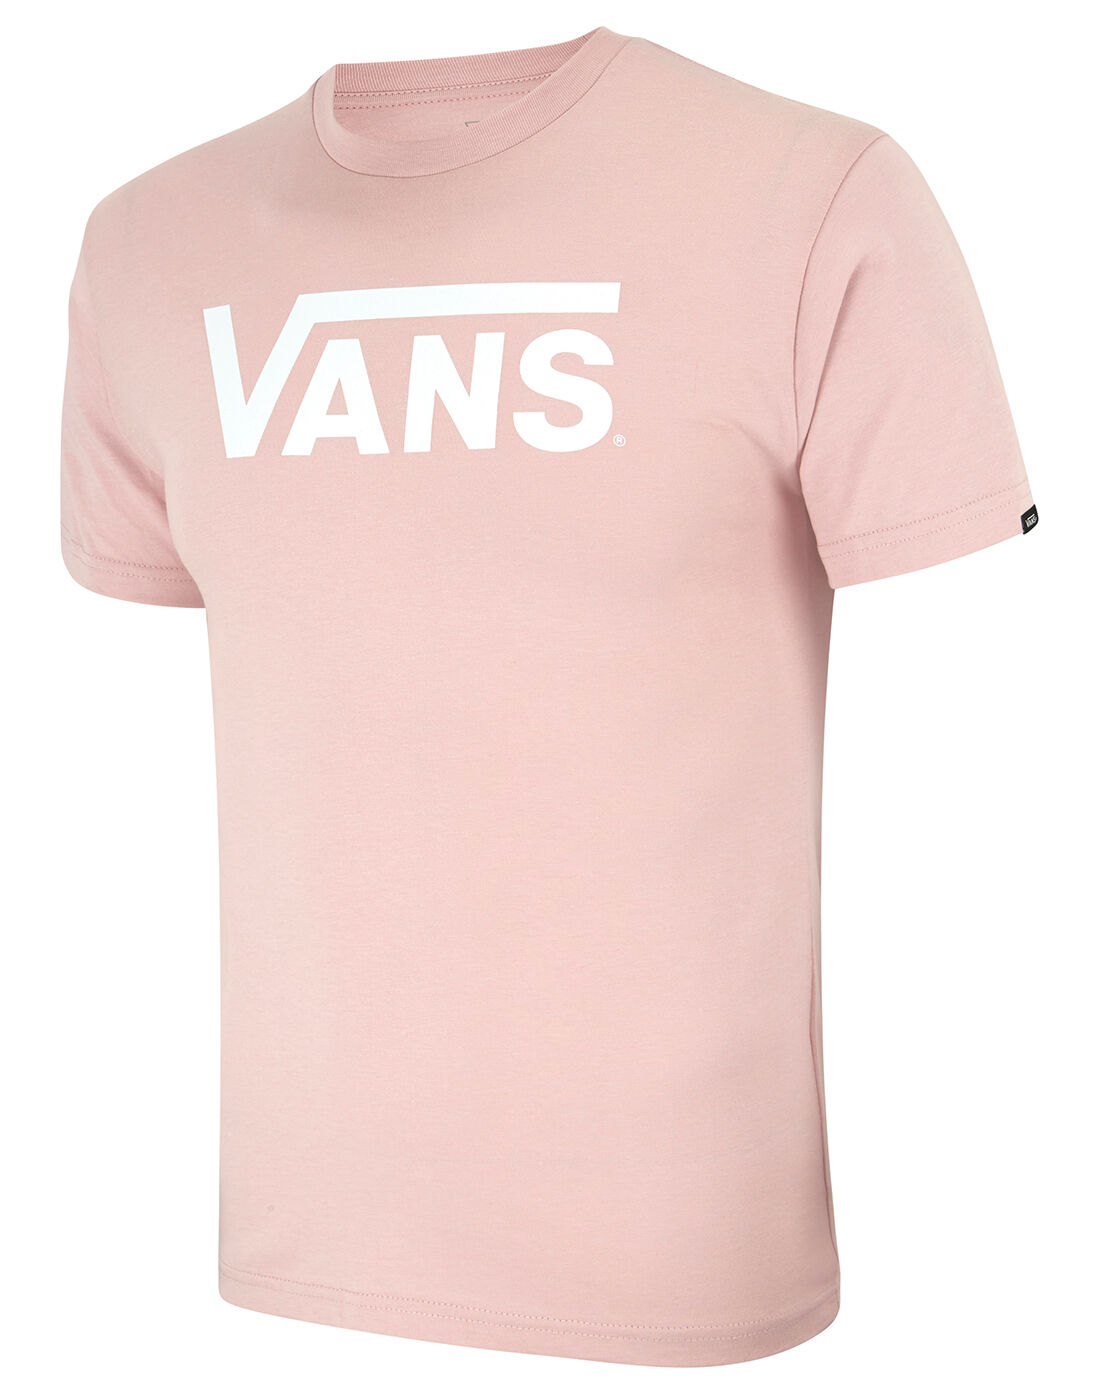 Men's Pink Vans T-Shirt | Life Style Sports